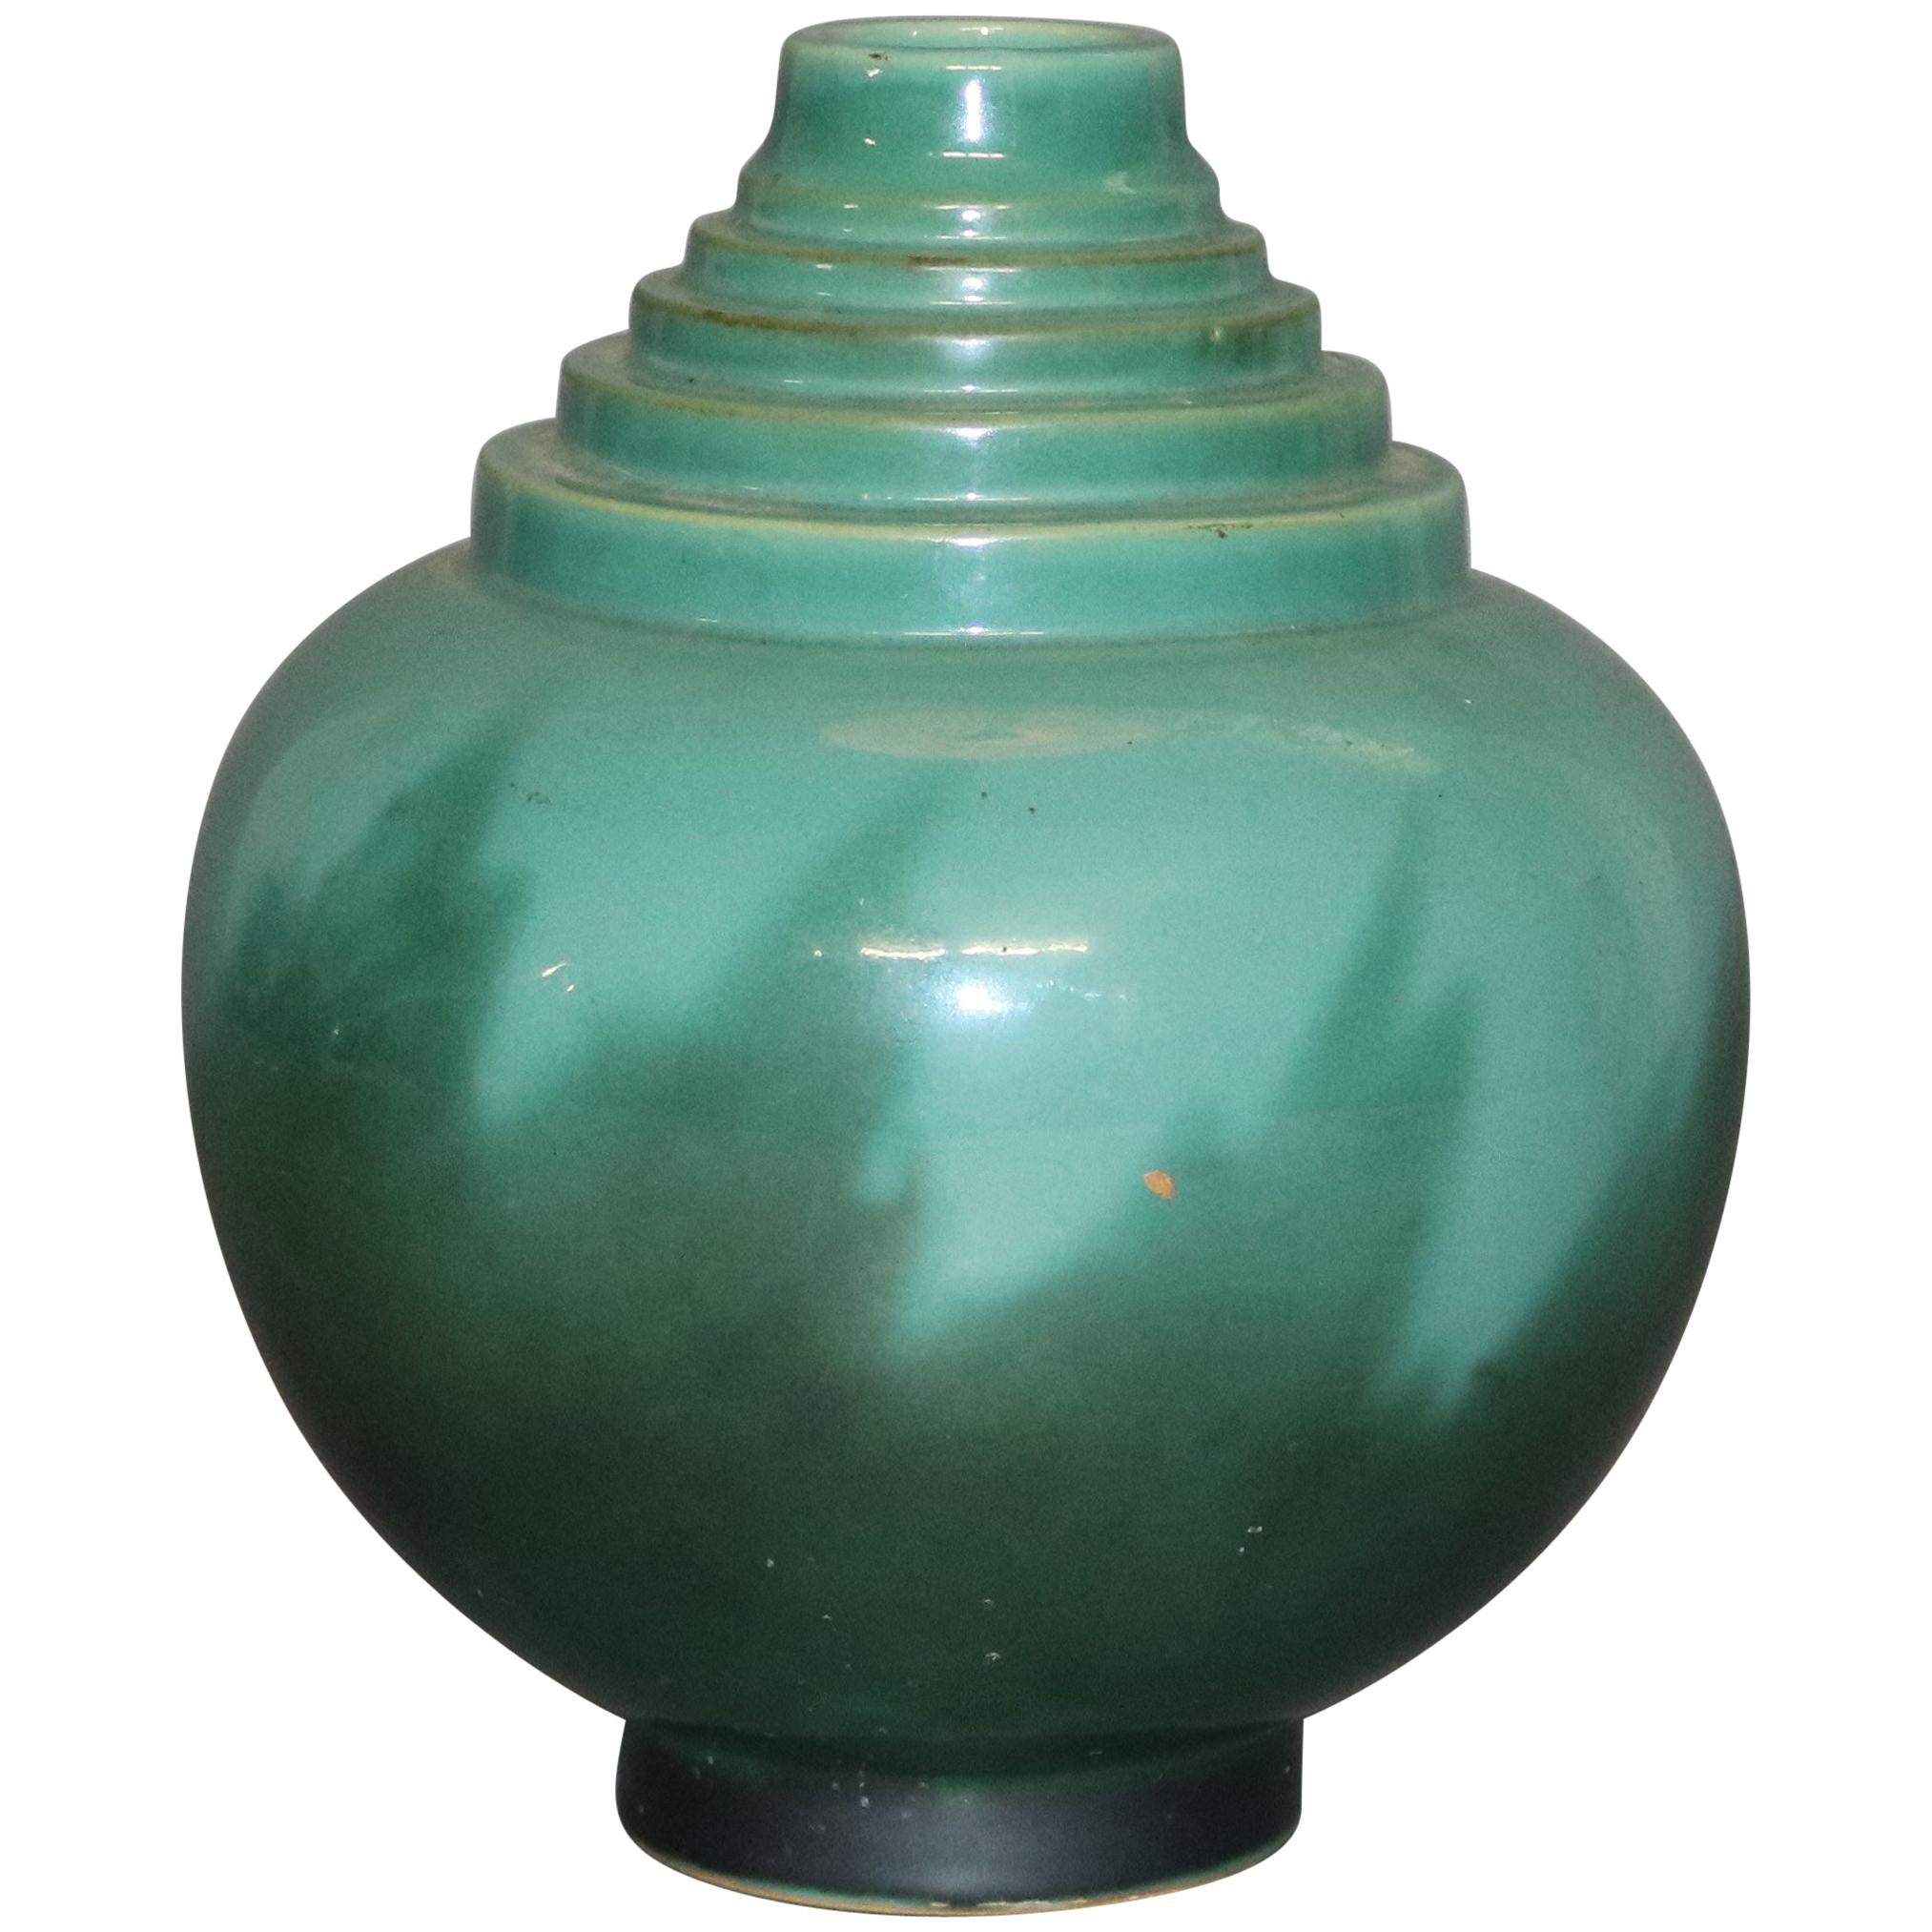 Art Deco Roseville Pottery Futura Black Flame Vase, 391-10, 20th Century